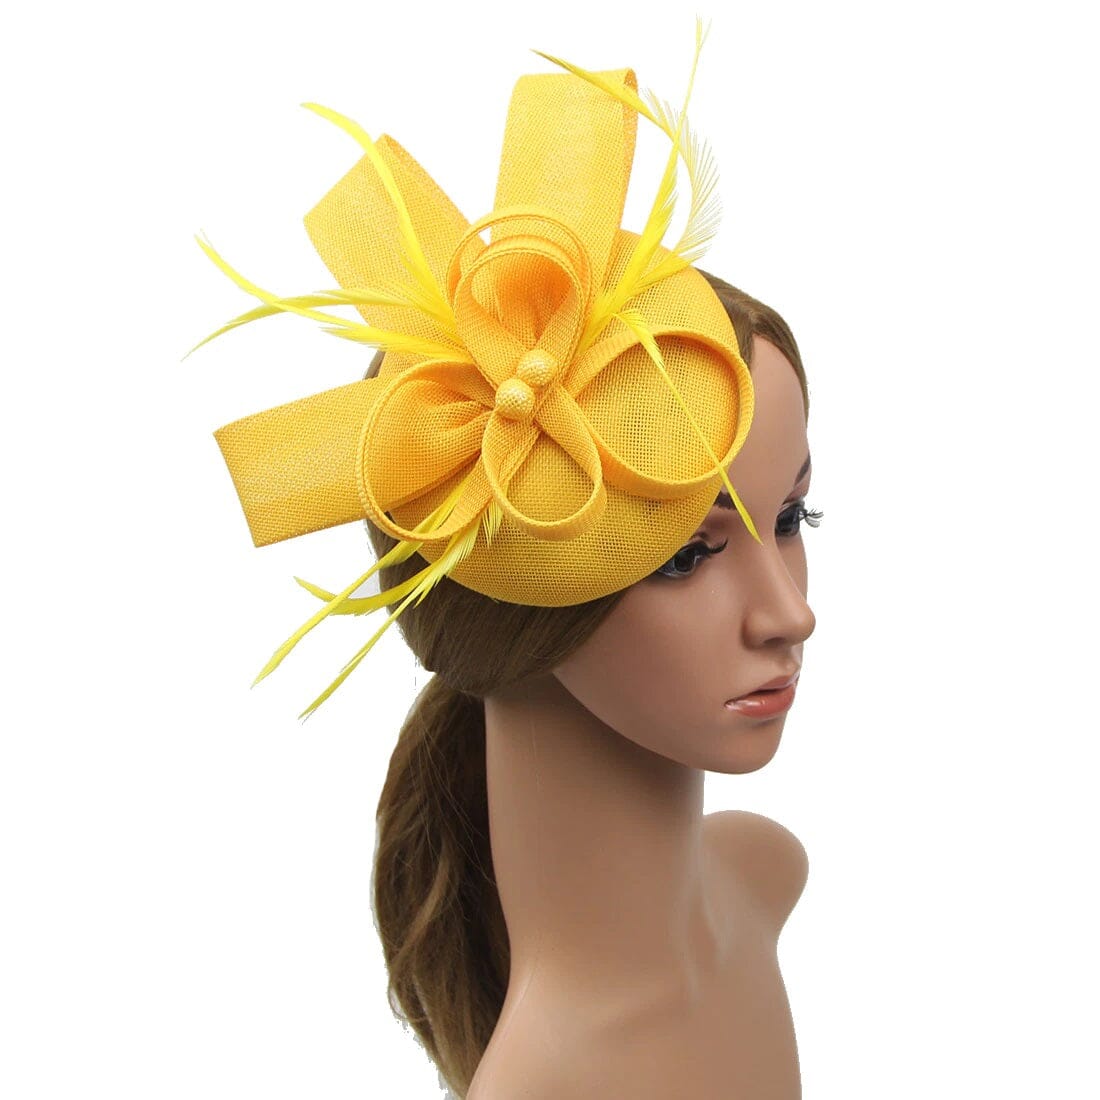 Women Fascinators Flower Ladies Pillbox Headband with clips Bridal Wedding Cocktail Tea Party Hat Hat jehouze 6 yellow 